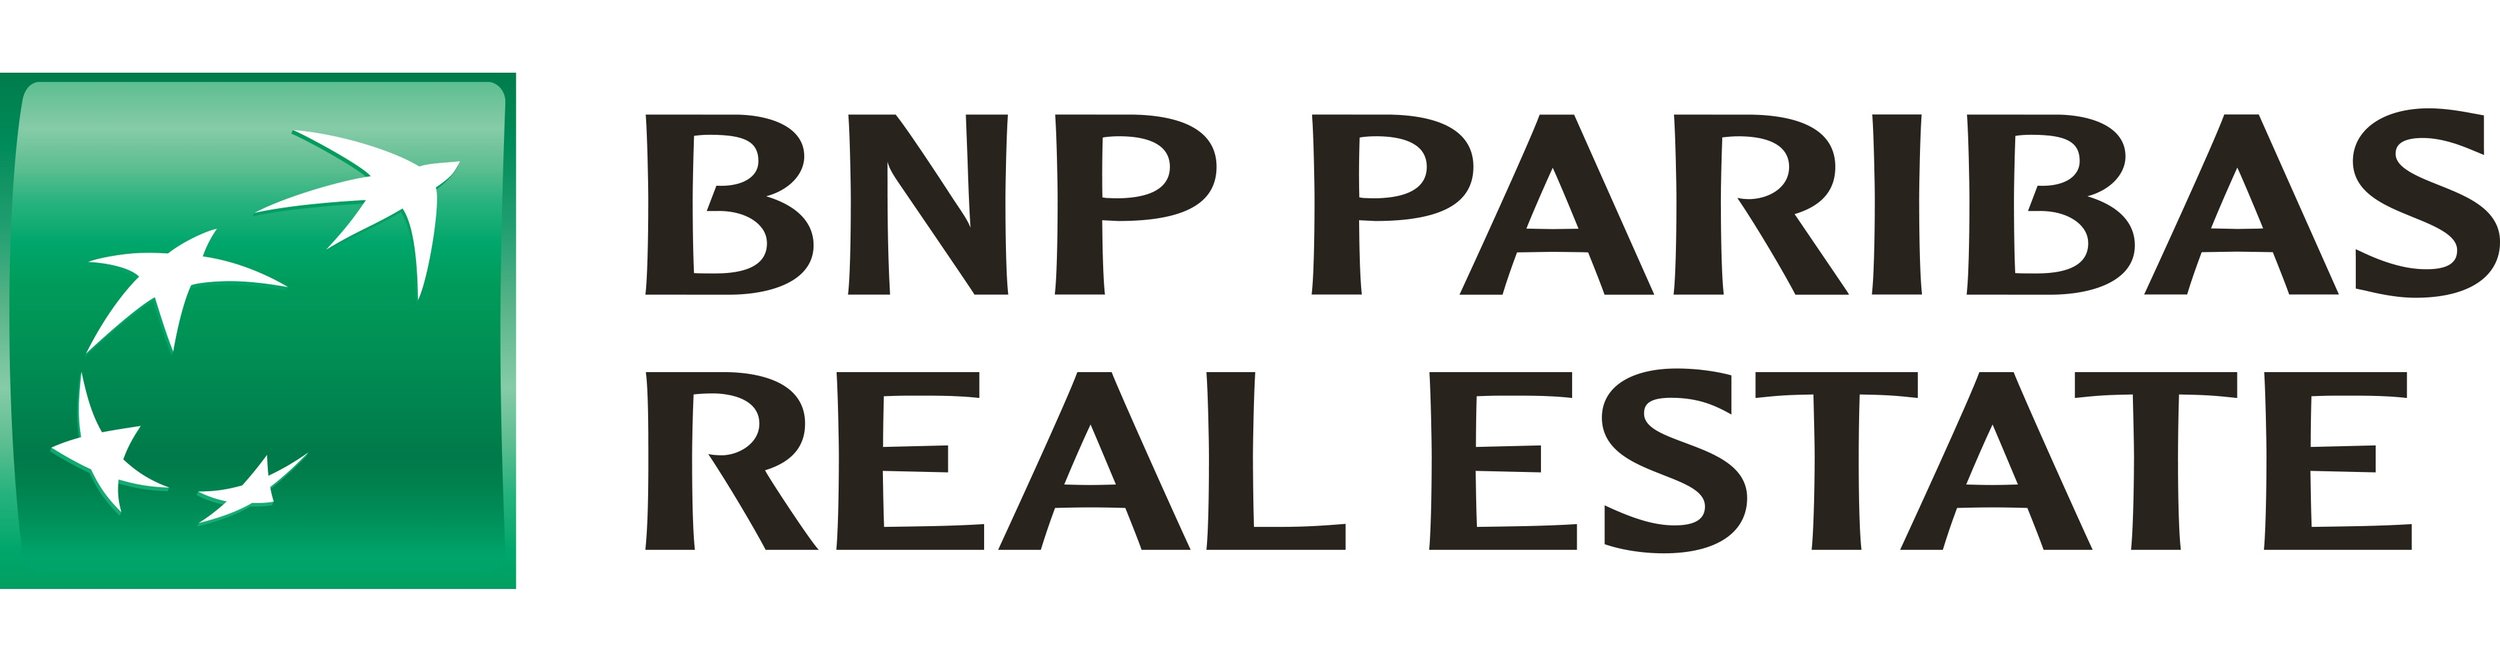 BNP-Paribas-Real-Estate-HiRes-1.jpg